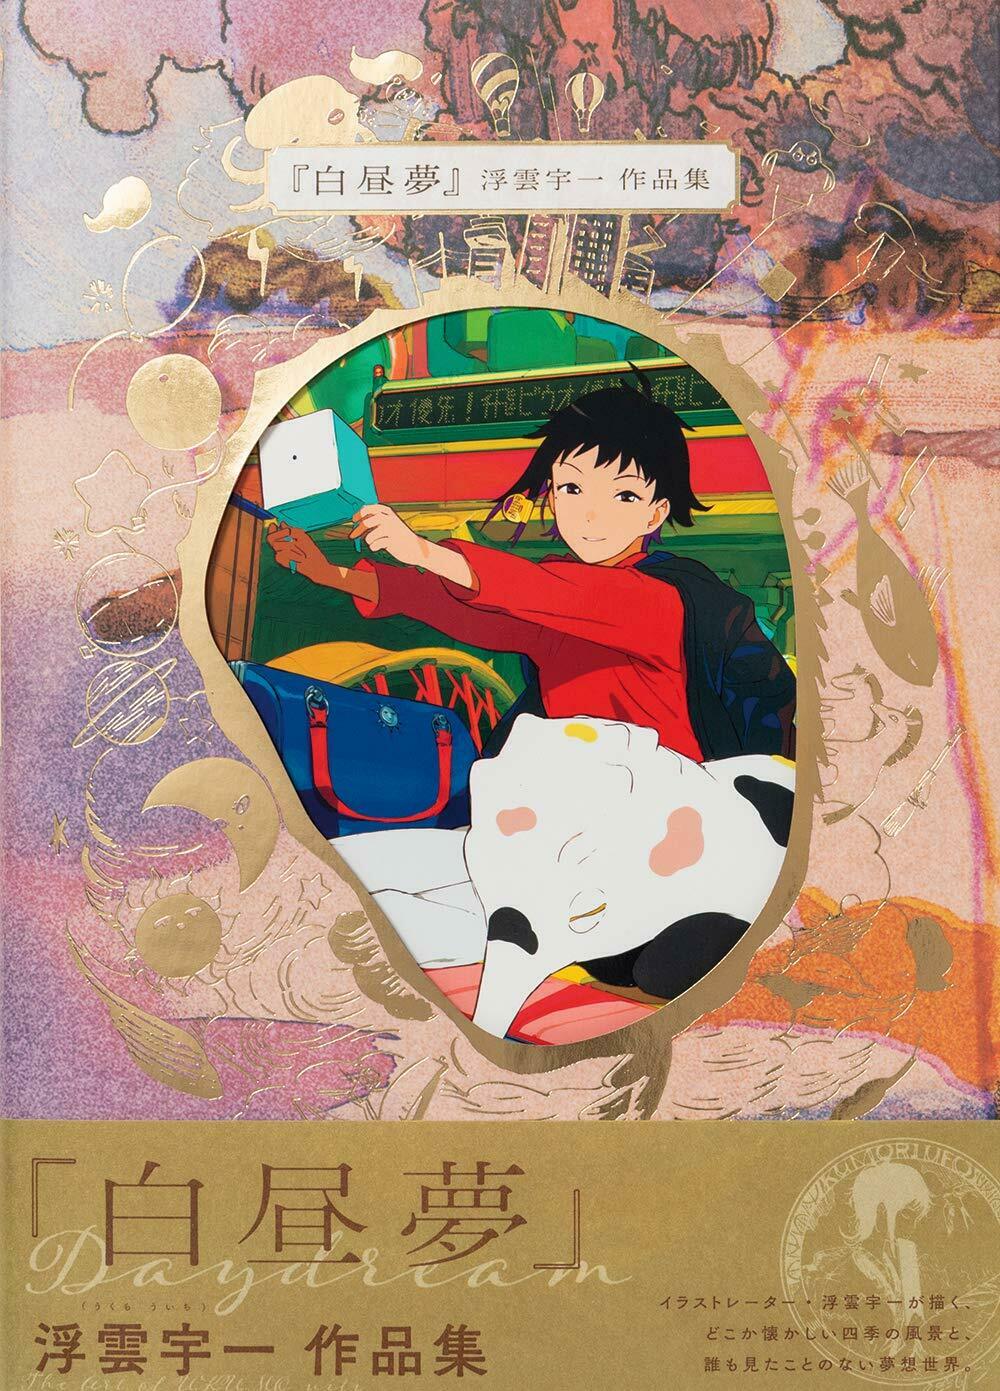 NEW' Uiti Ukumo Artworks Daydream" | JAPAN Illustration Art Book